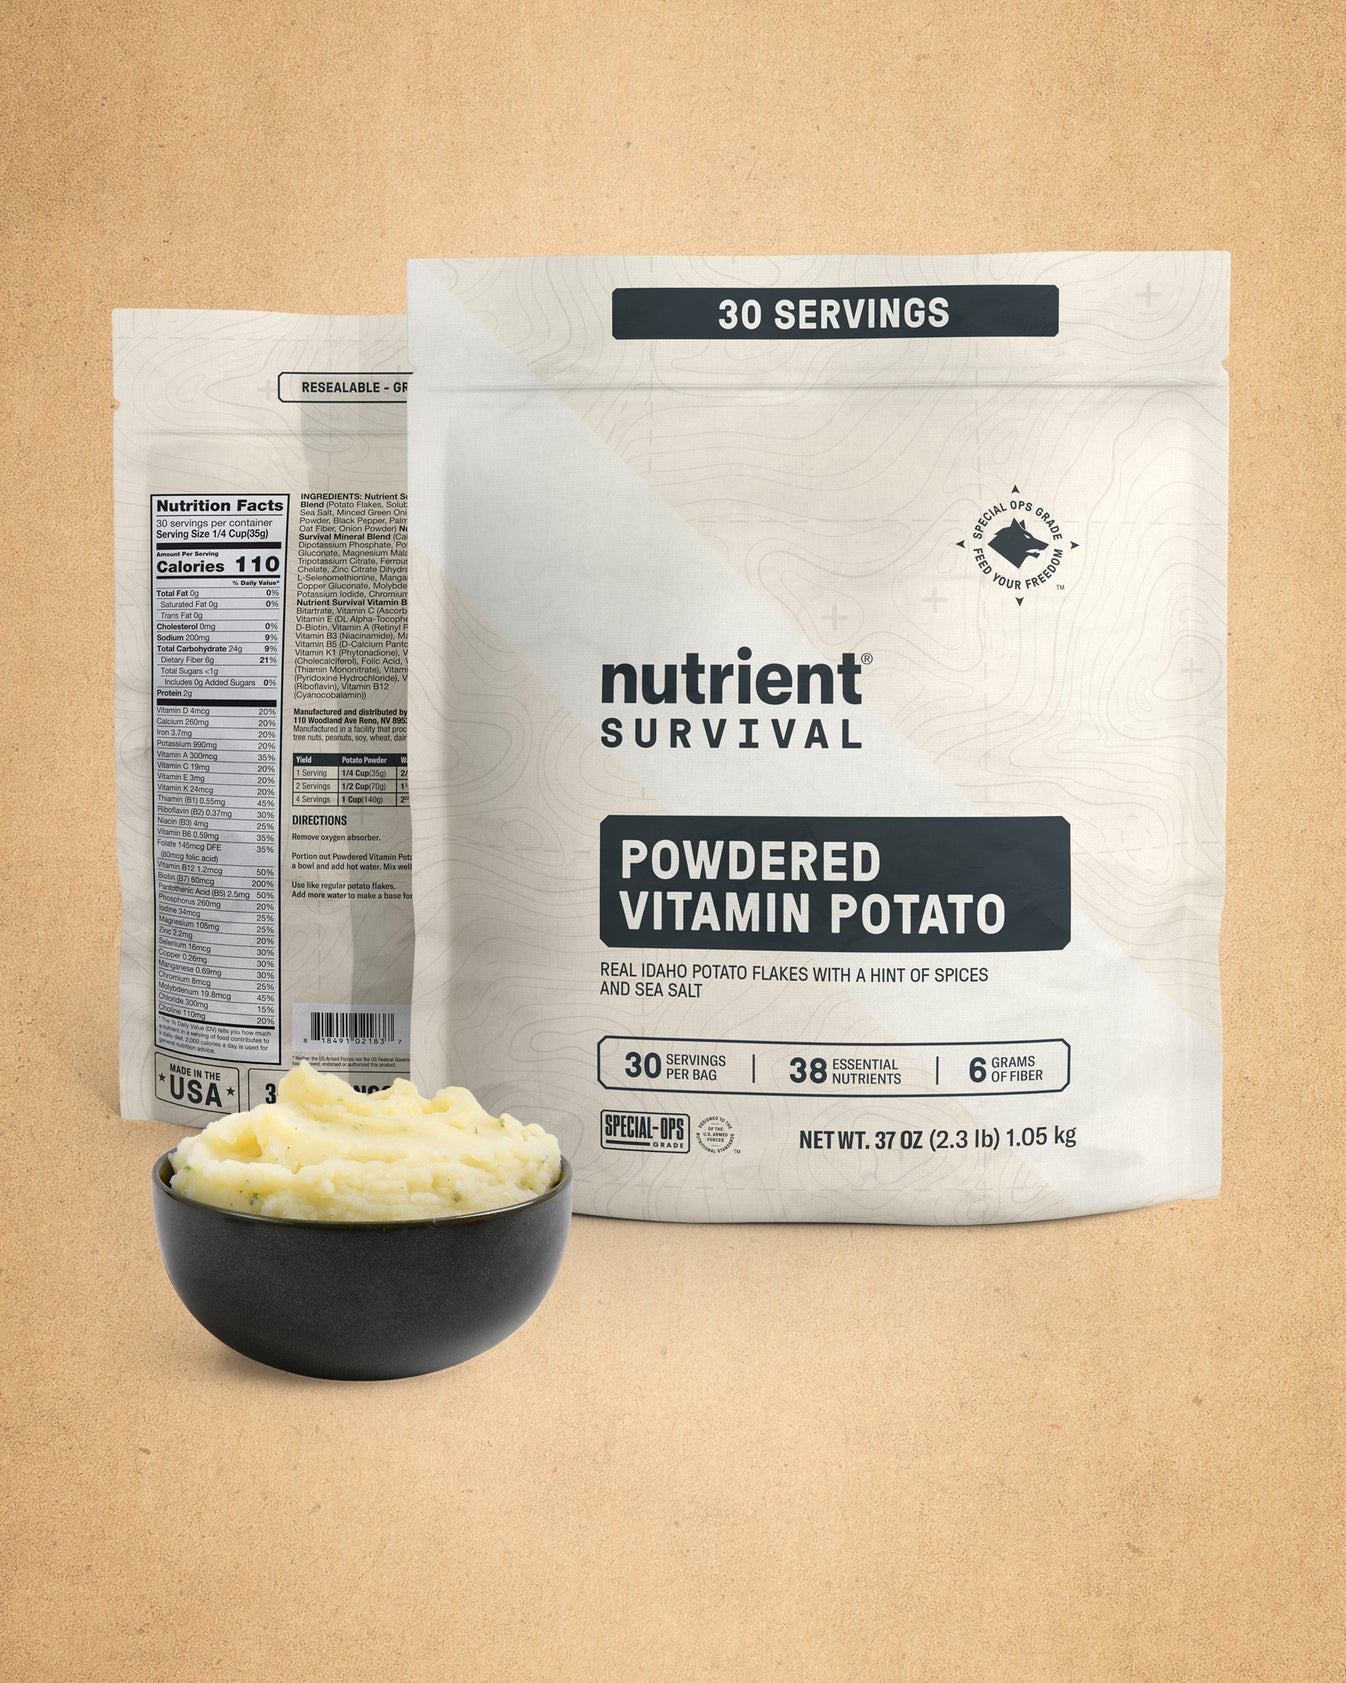 Powdered Vitamin Potato Pantry Pack